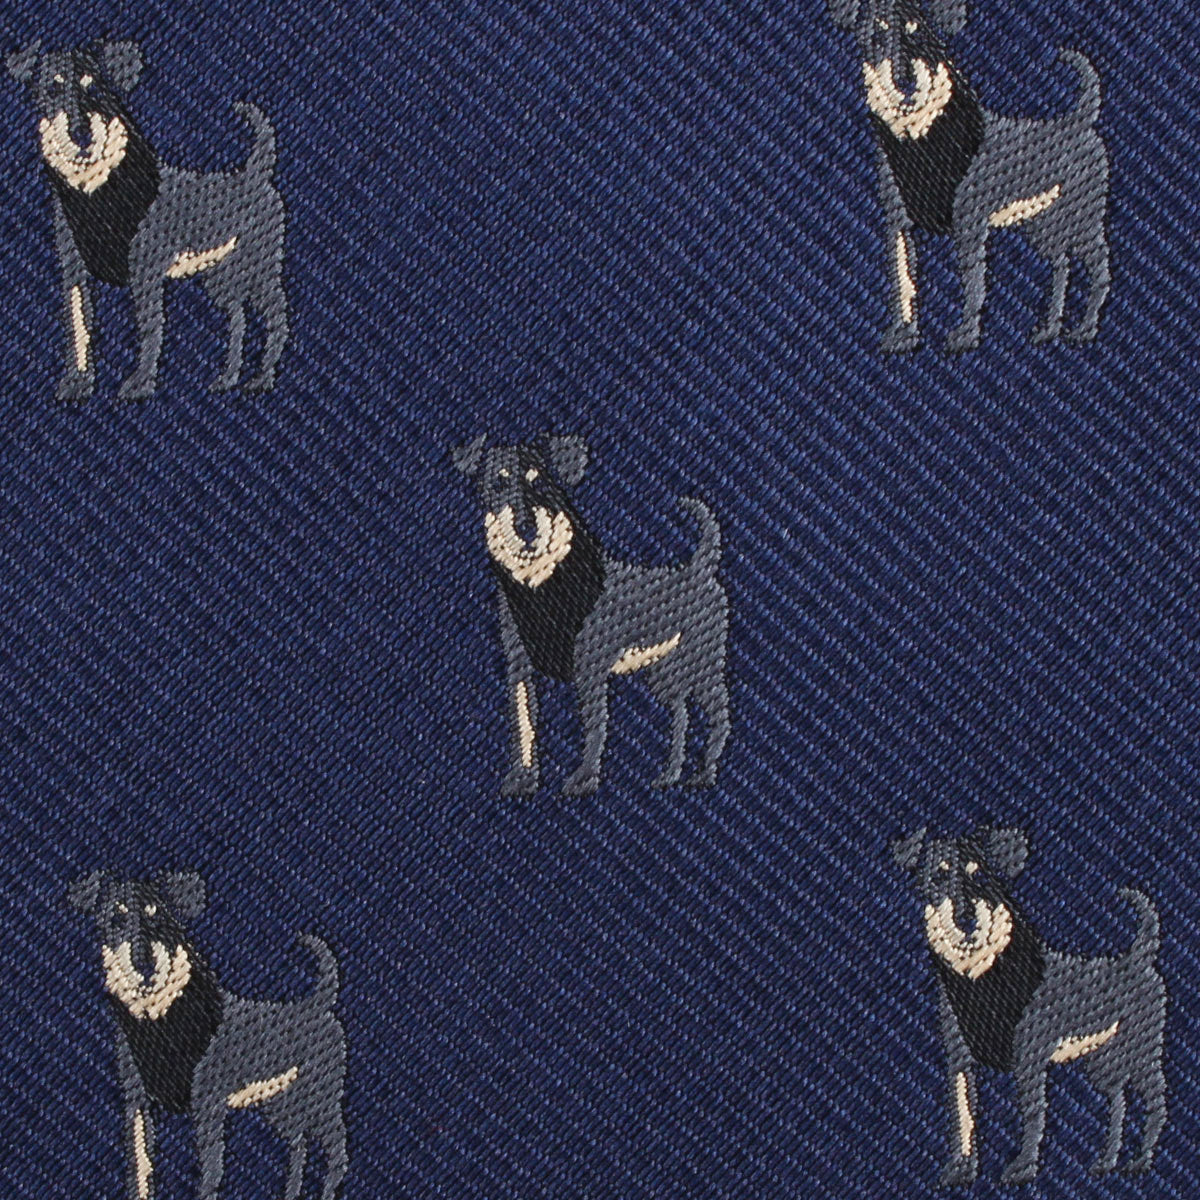 Rottweiler Dog Fabric Self Bowtie